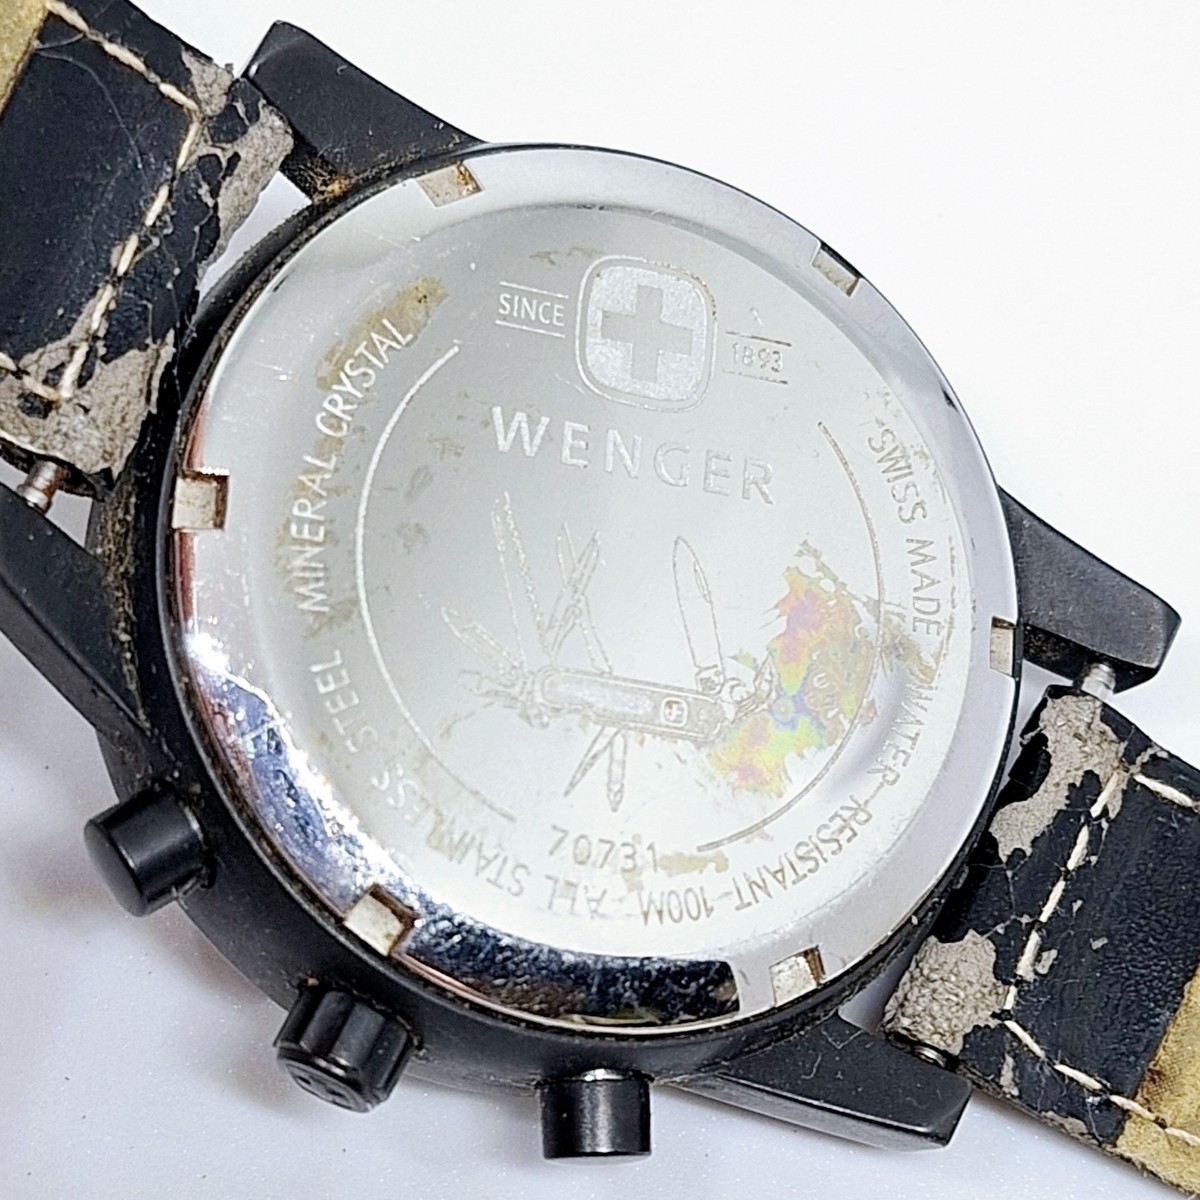 34 WENGER ウェンガー 70731 ミリタリー メンズ腕時計 腕時計 時計 革ベルト クロノグラフ デイト 3針 タキメーター ラウンド WKHの画像2